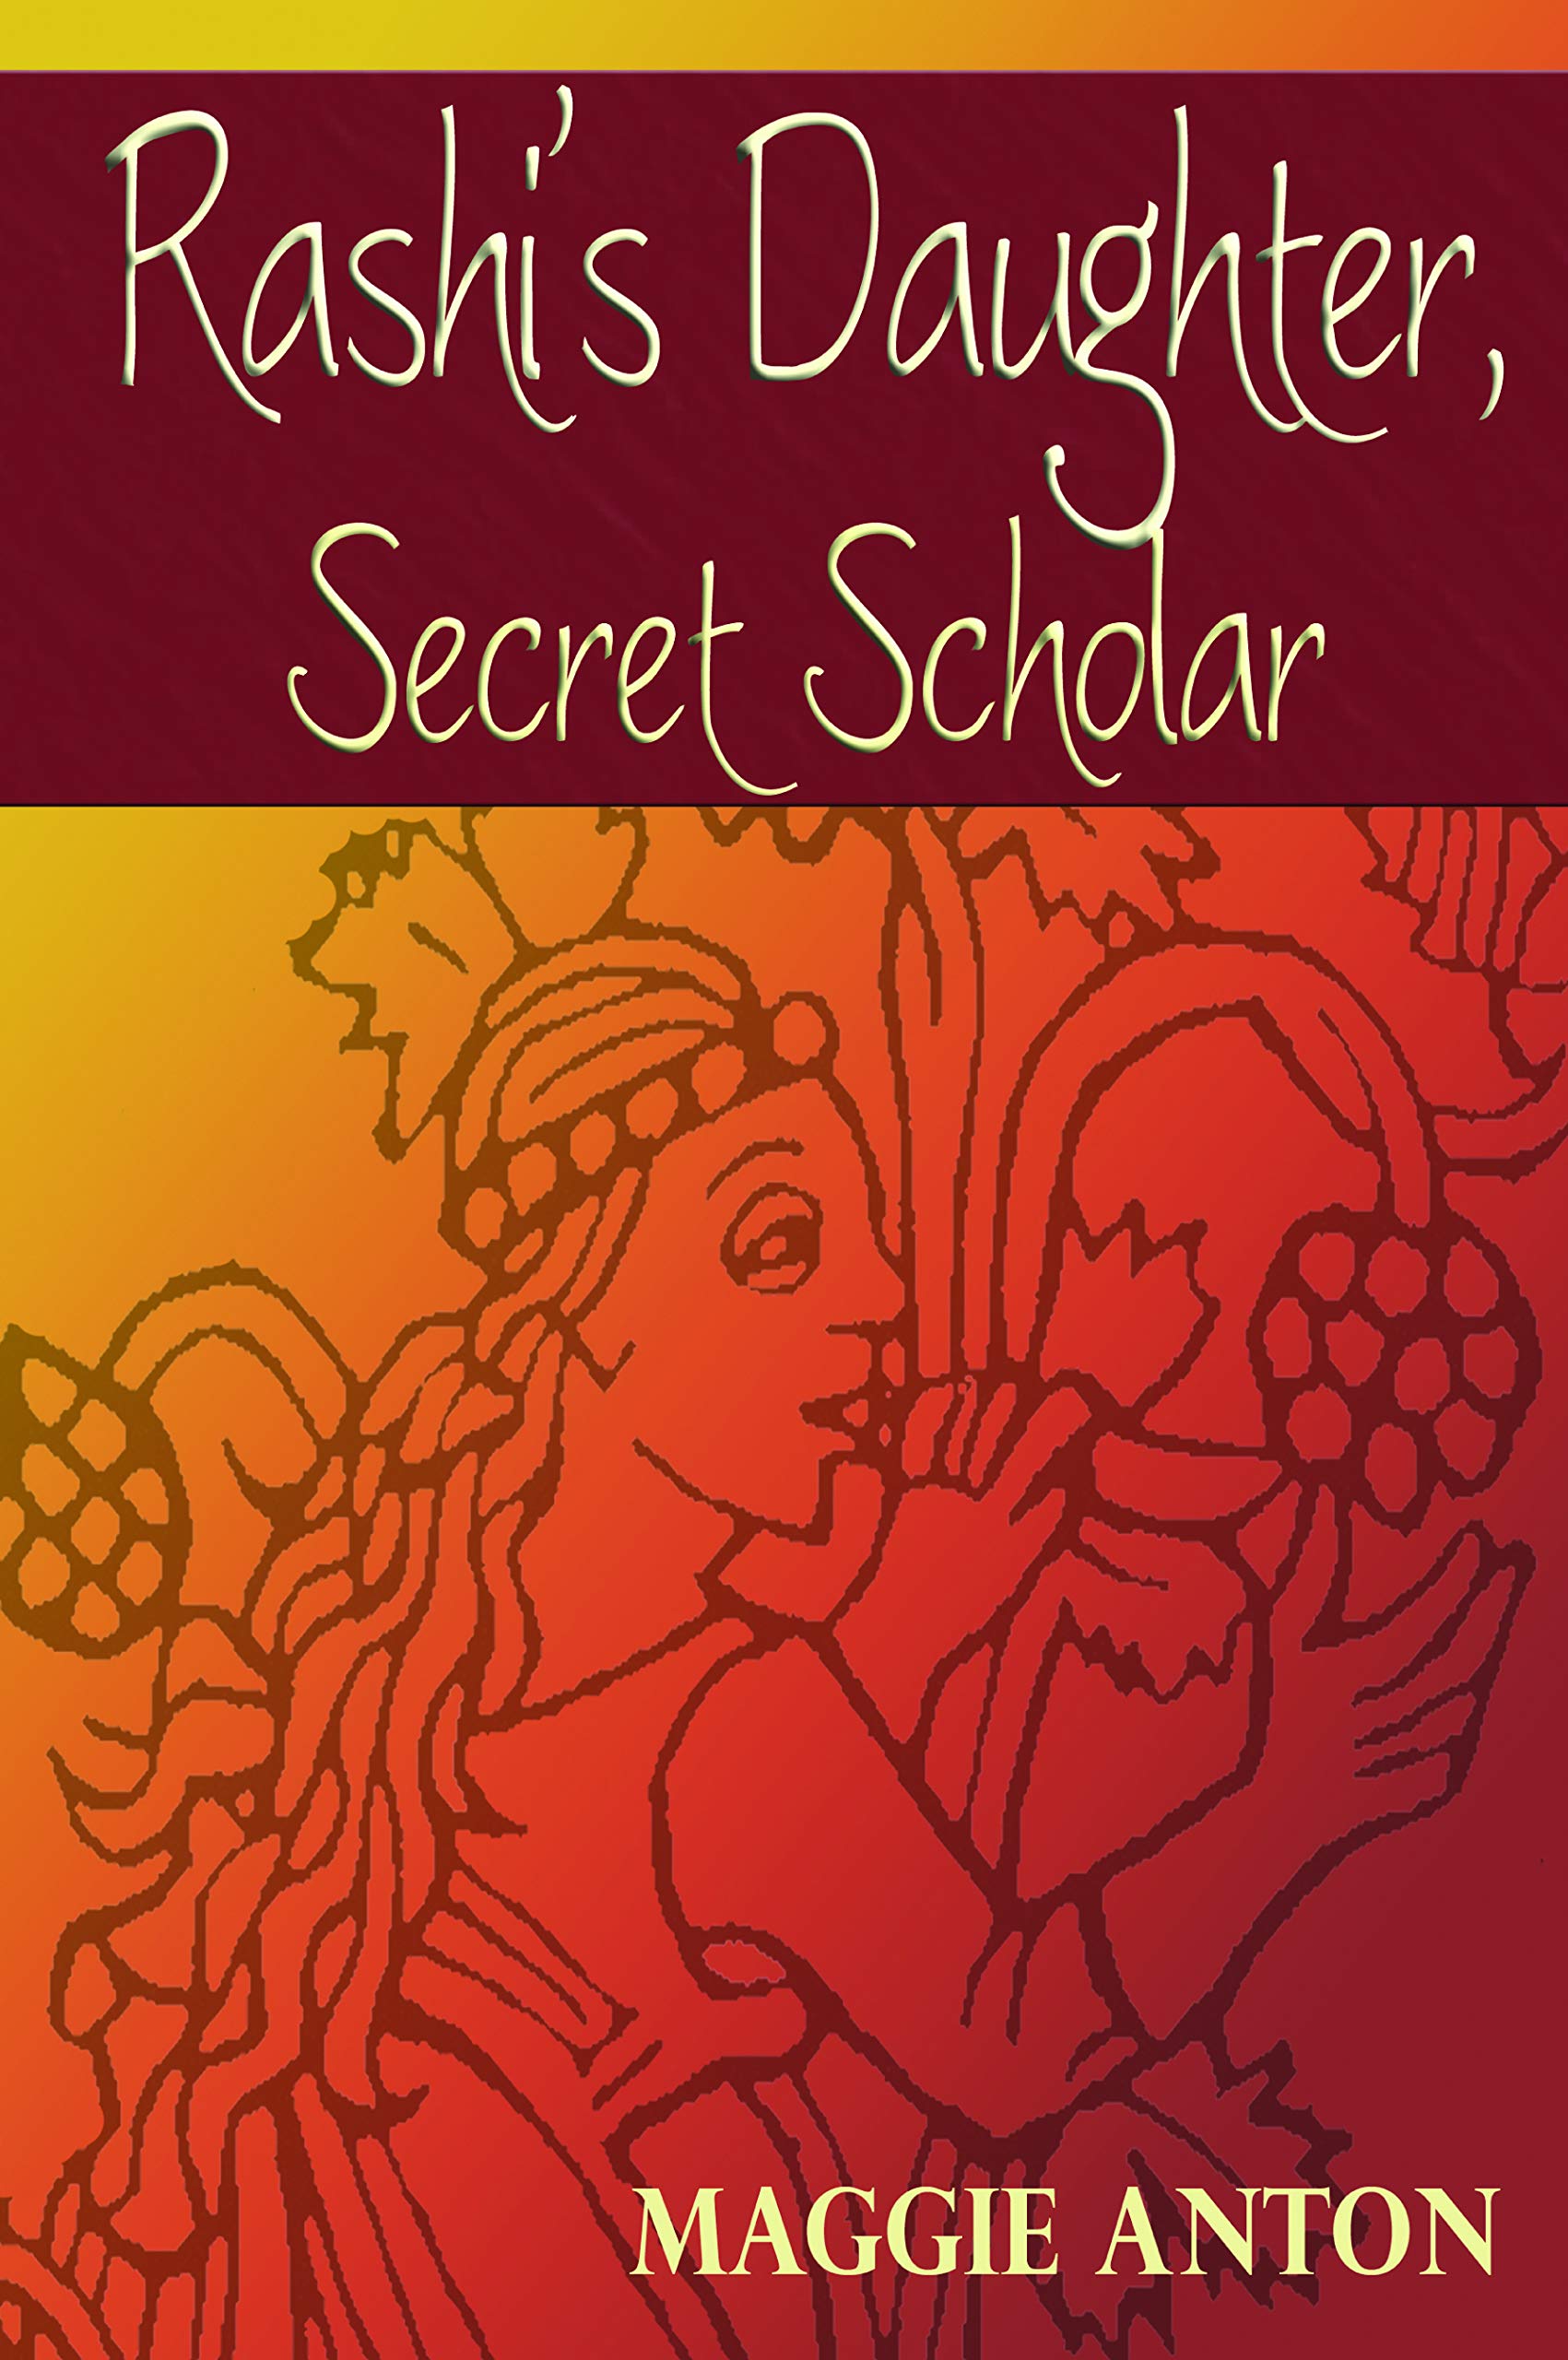 Rashi's Daughter, Secret Scholar